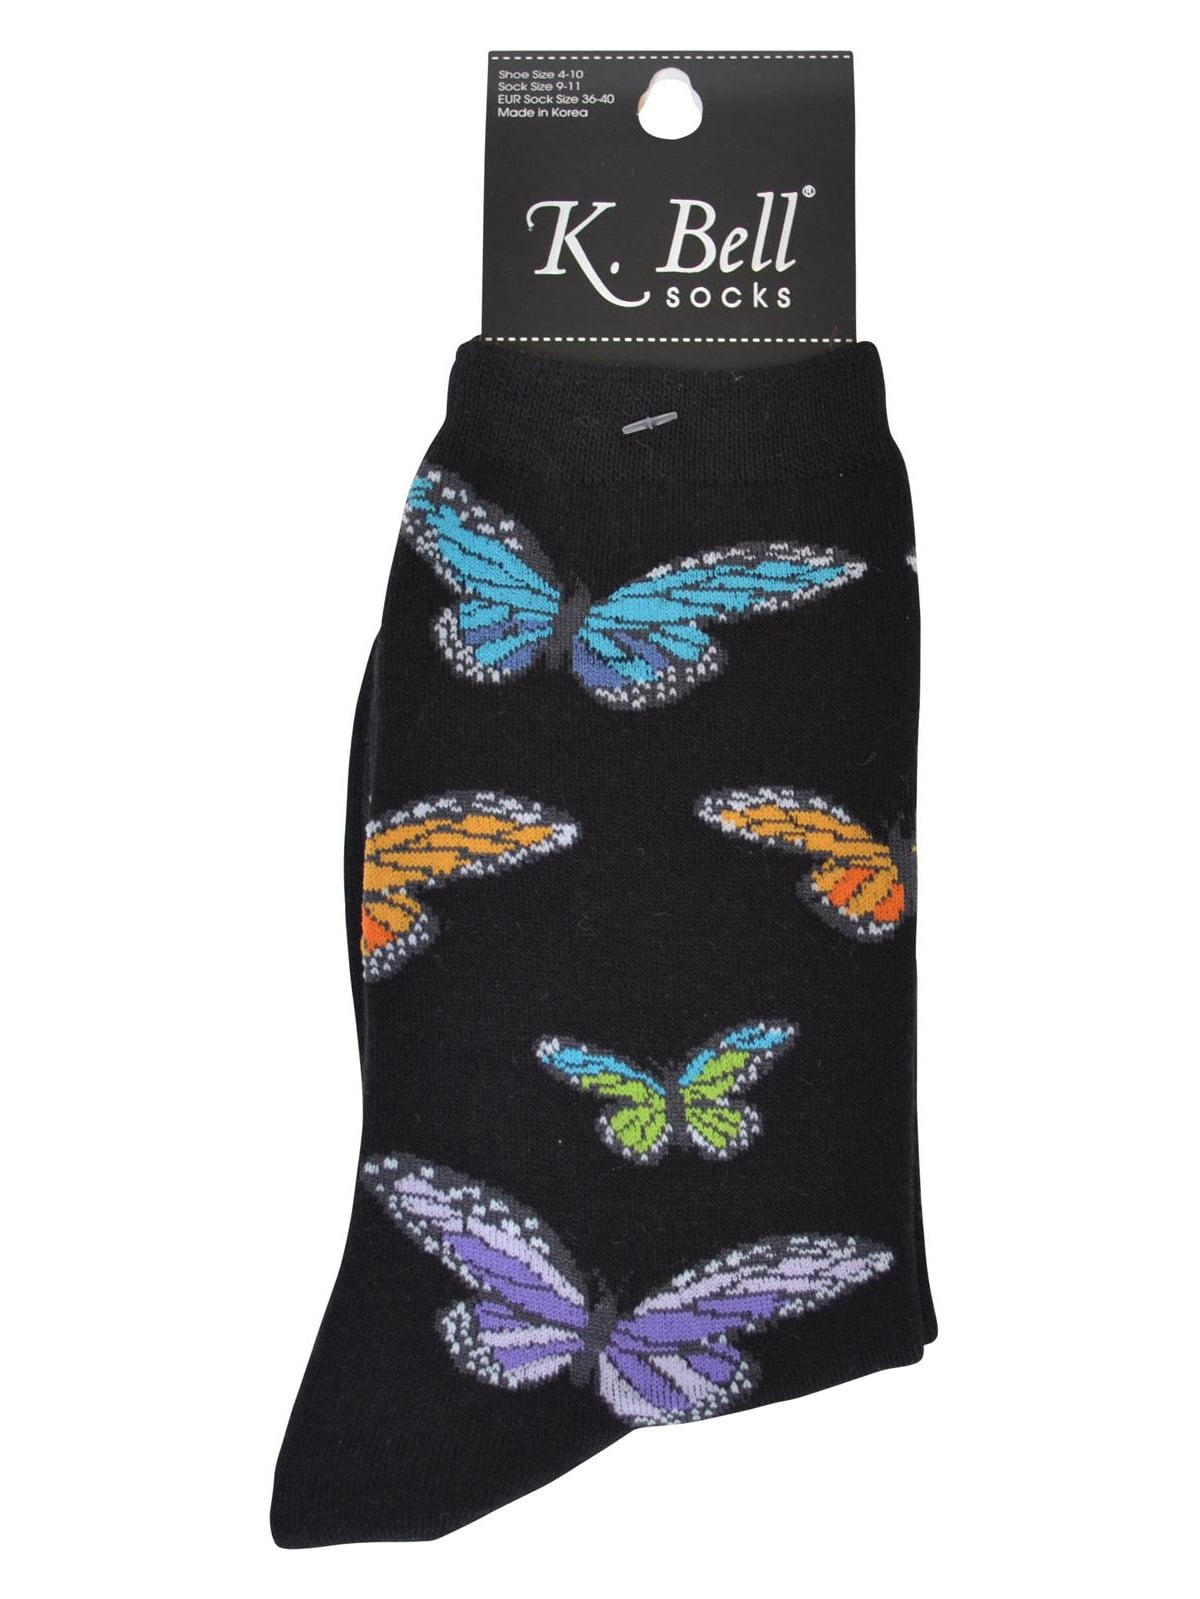 Bell Laurel Burch Women's Crew Socks 9-11 BUTTERFLIES Black Shoe 4-10 gift K 